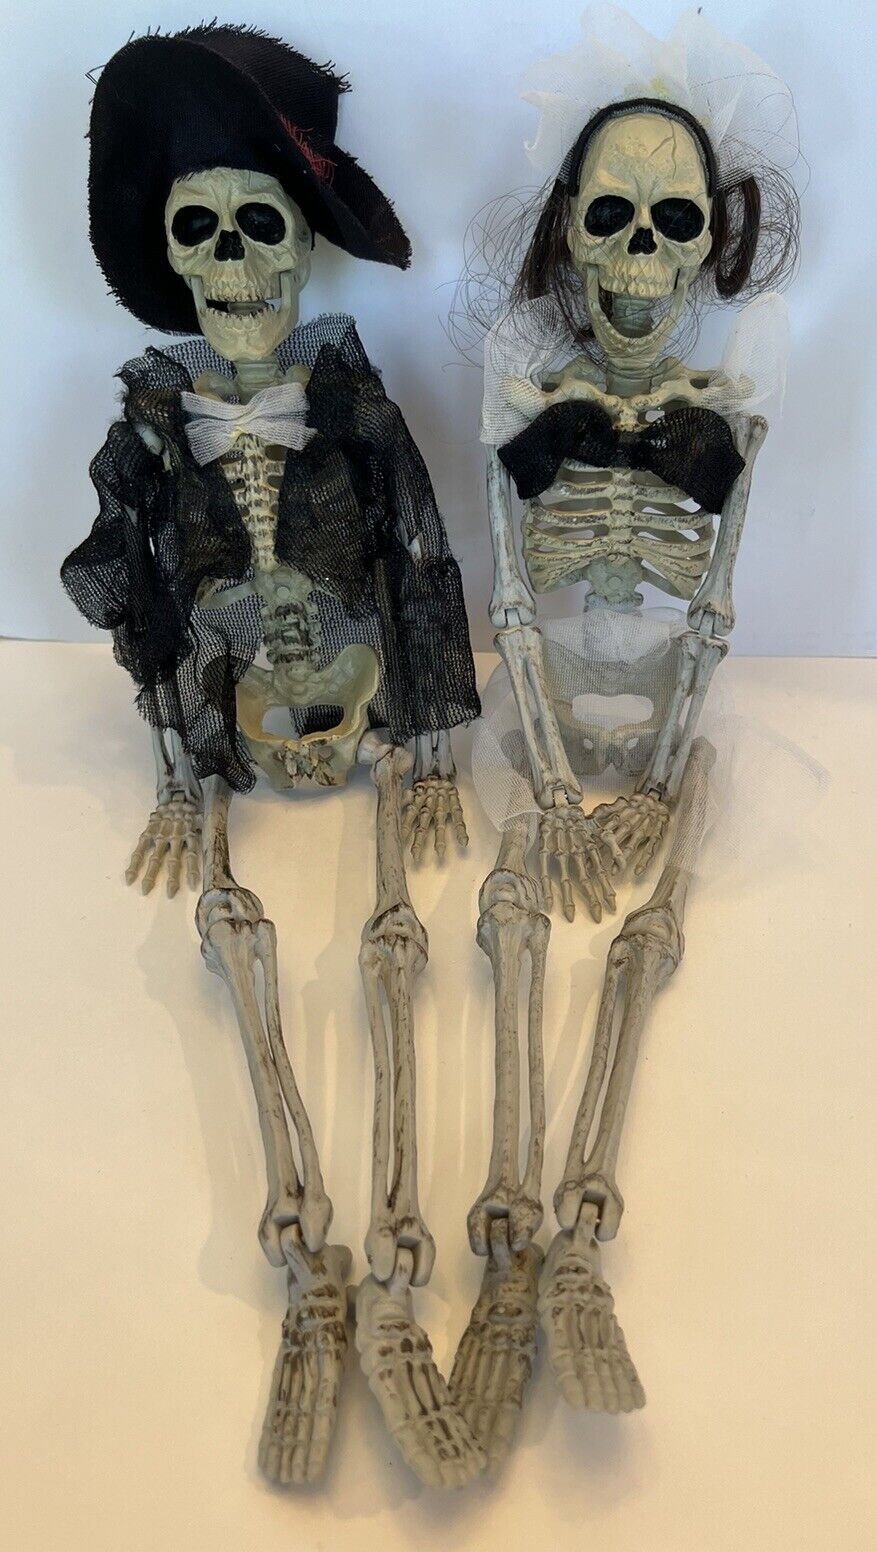 Magic Power Bride And Groom Hanging Skeleton Figure 2010 Halloween Decoration